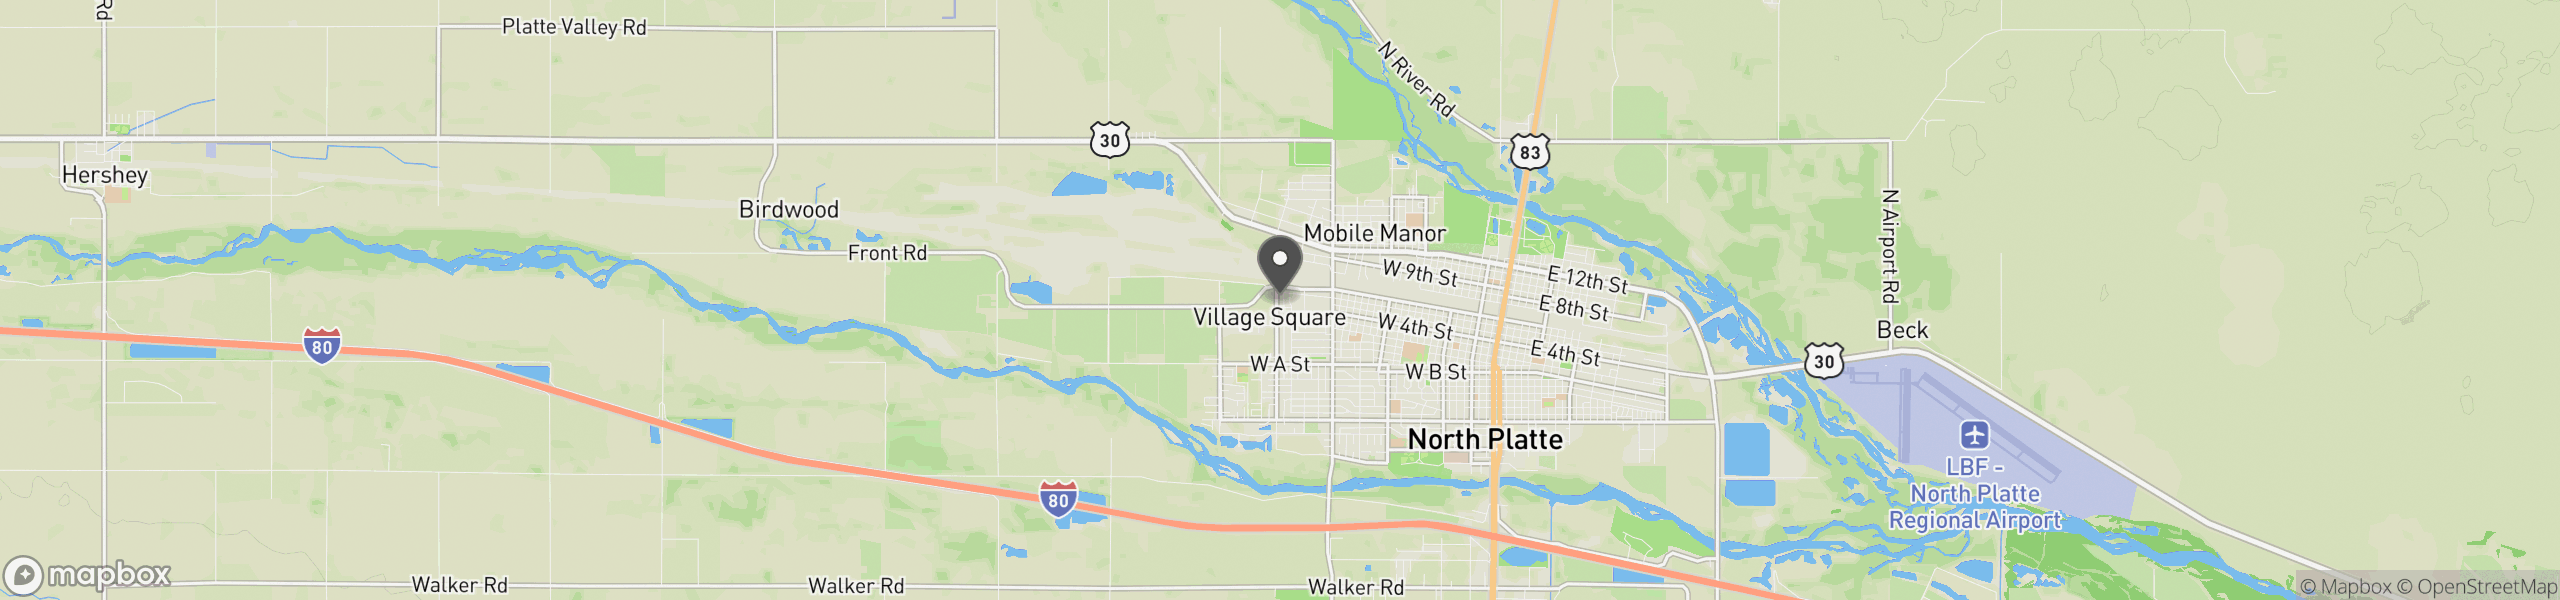 North Platte, NE 69101